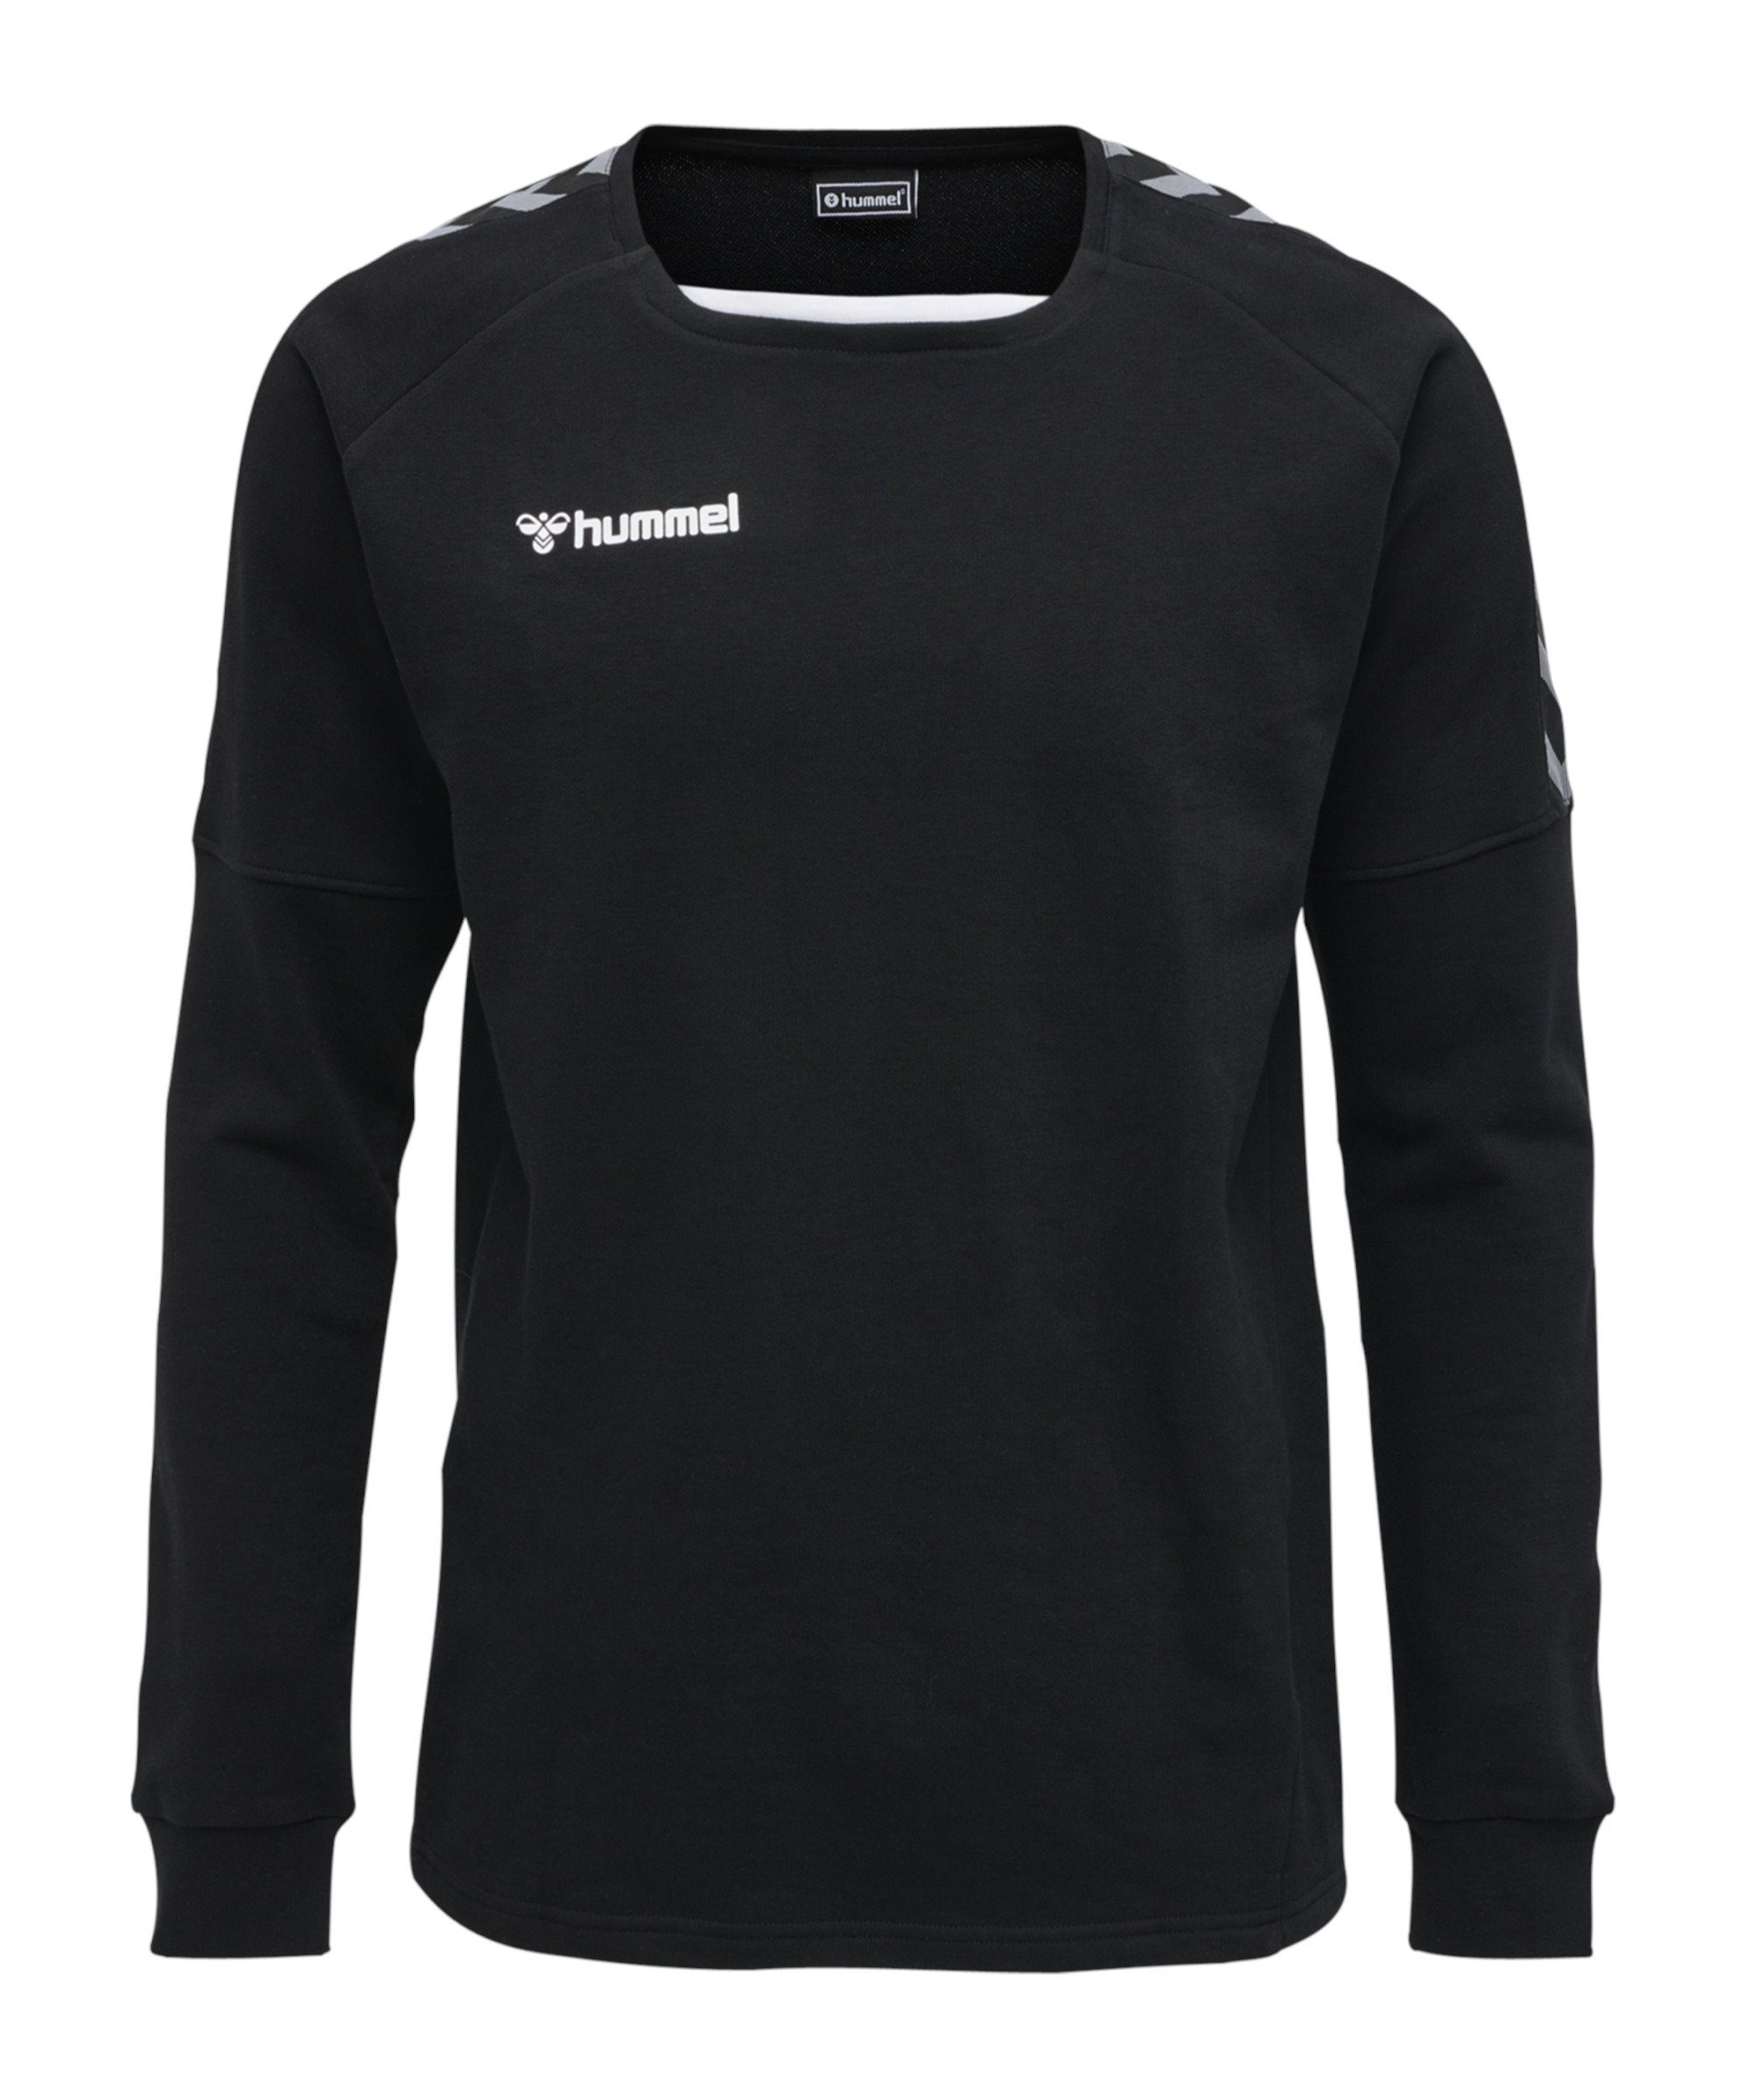 Authentic hummel Sweatshirt Sweatshirt schwarzweiss Training